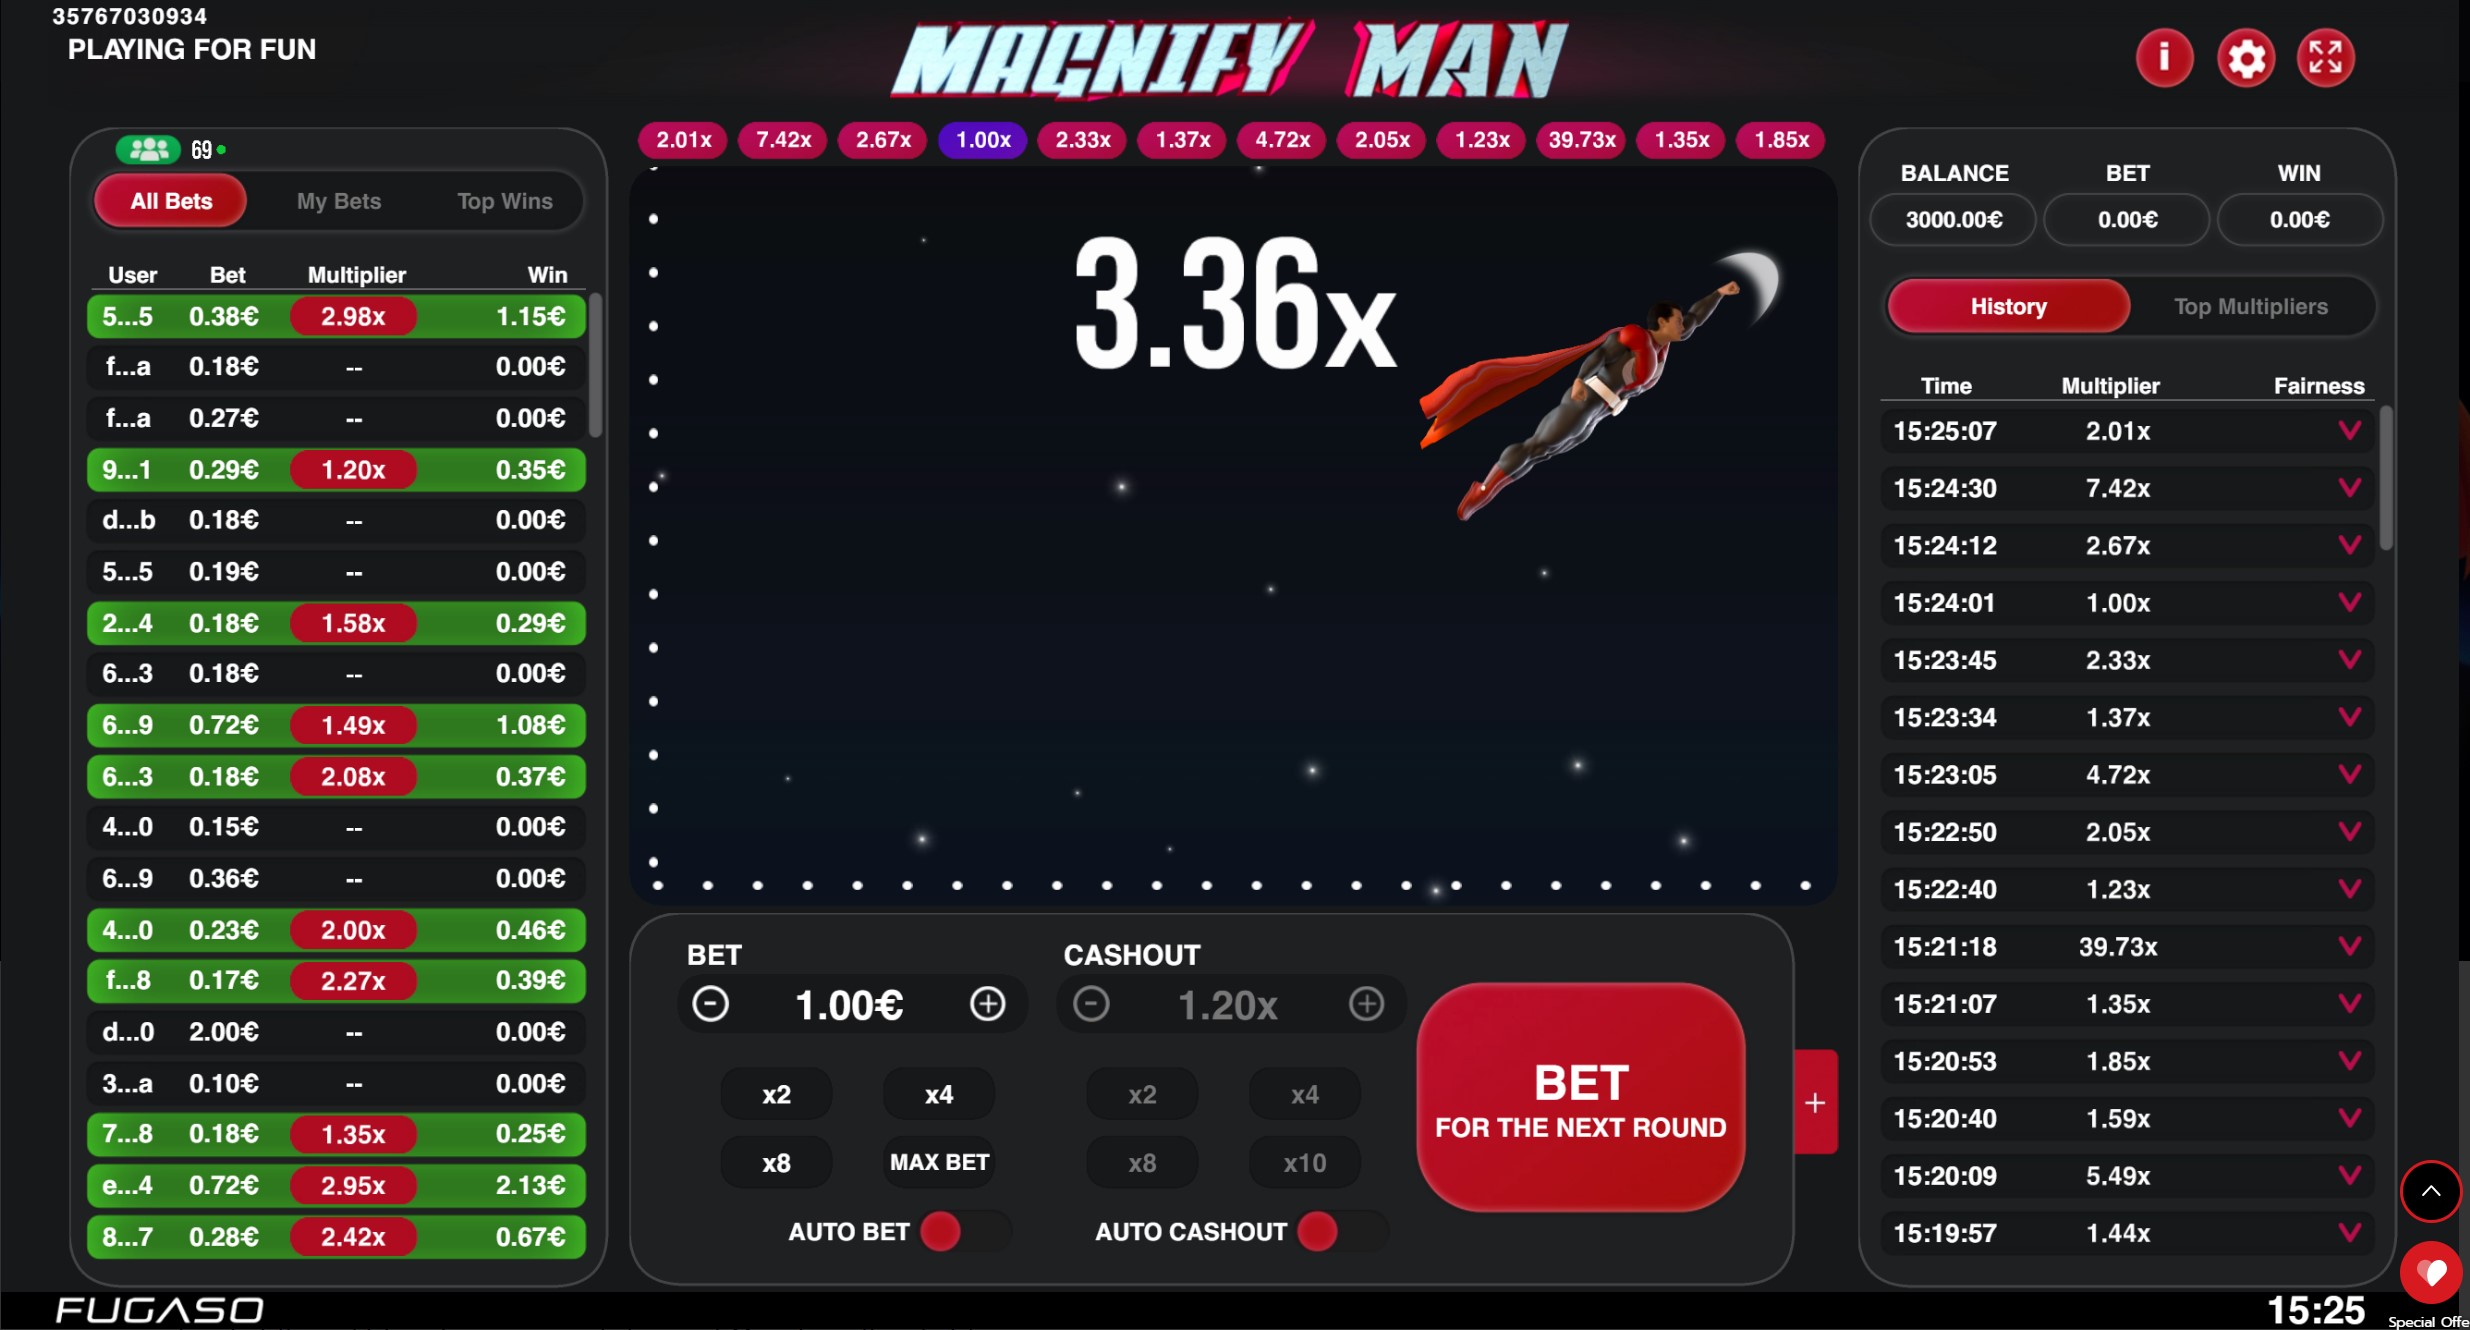 Magnify Man Game interface